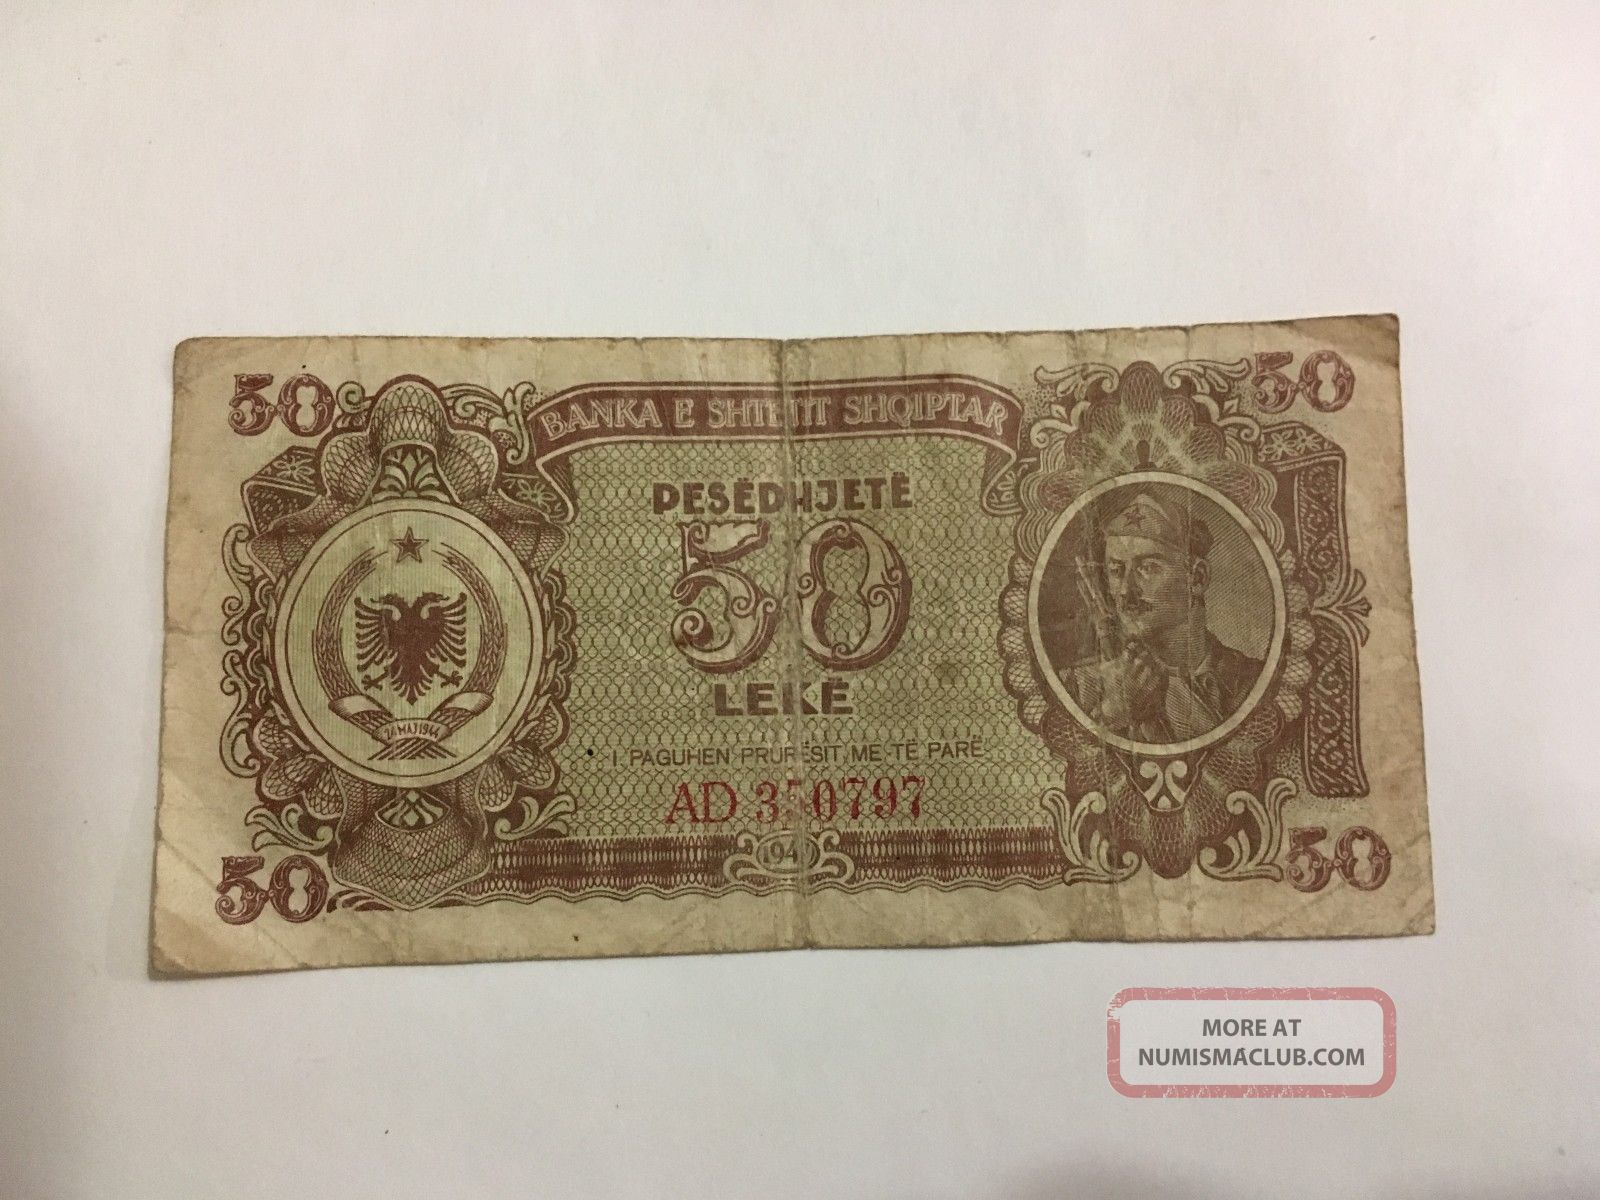 Albania Paper Money 50 Leke 1947 Banknote Albanian Lek 50 From 1947 Communism Europe photo